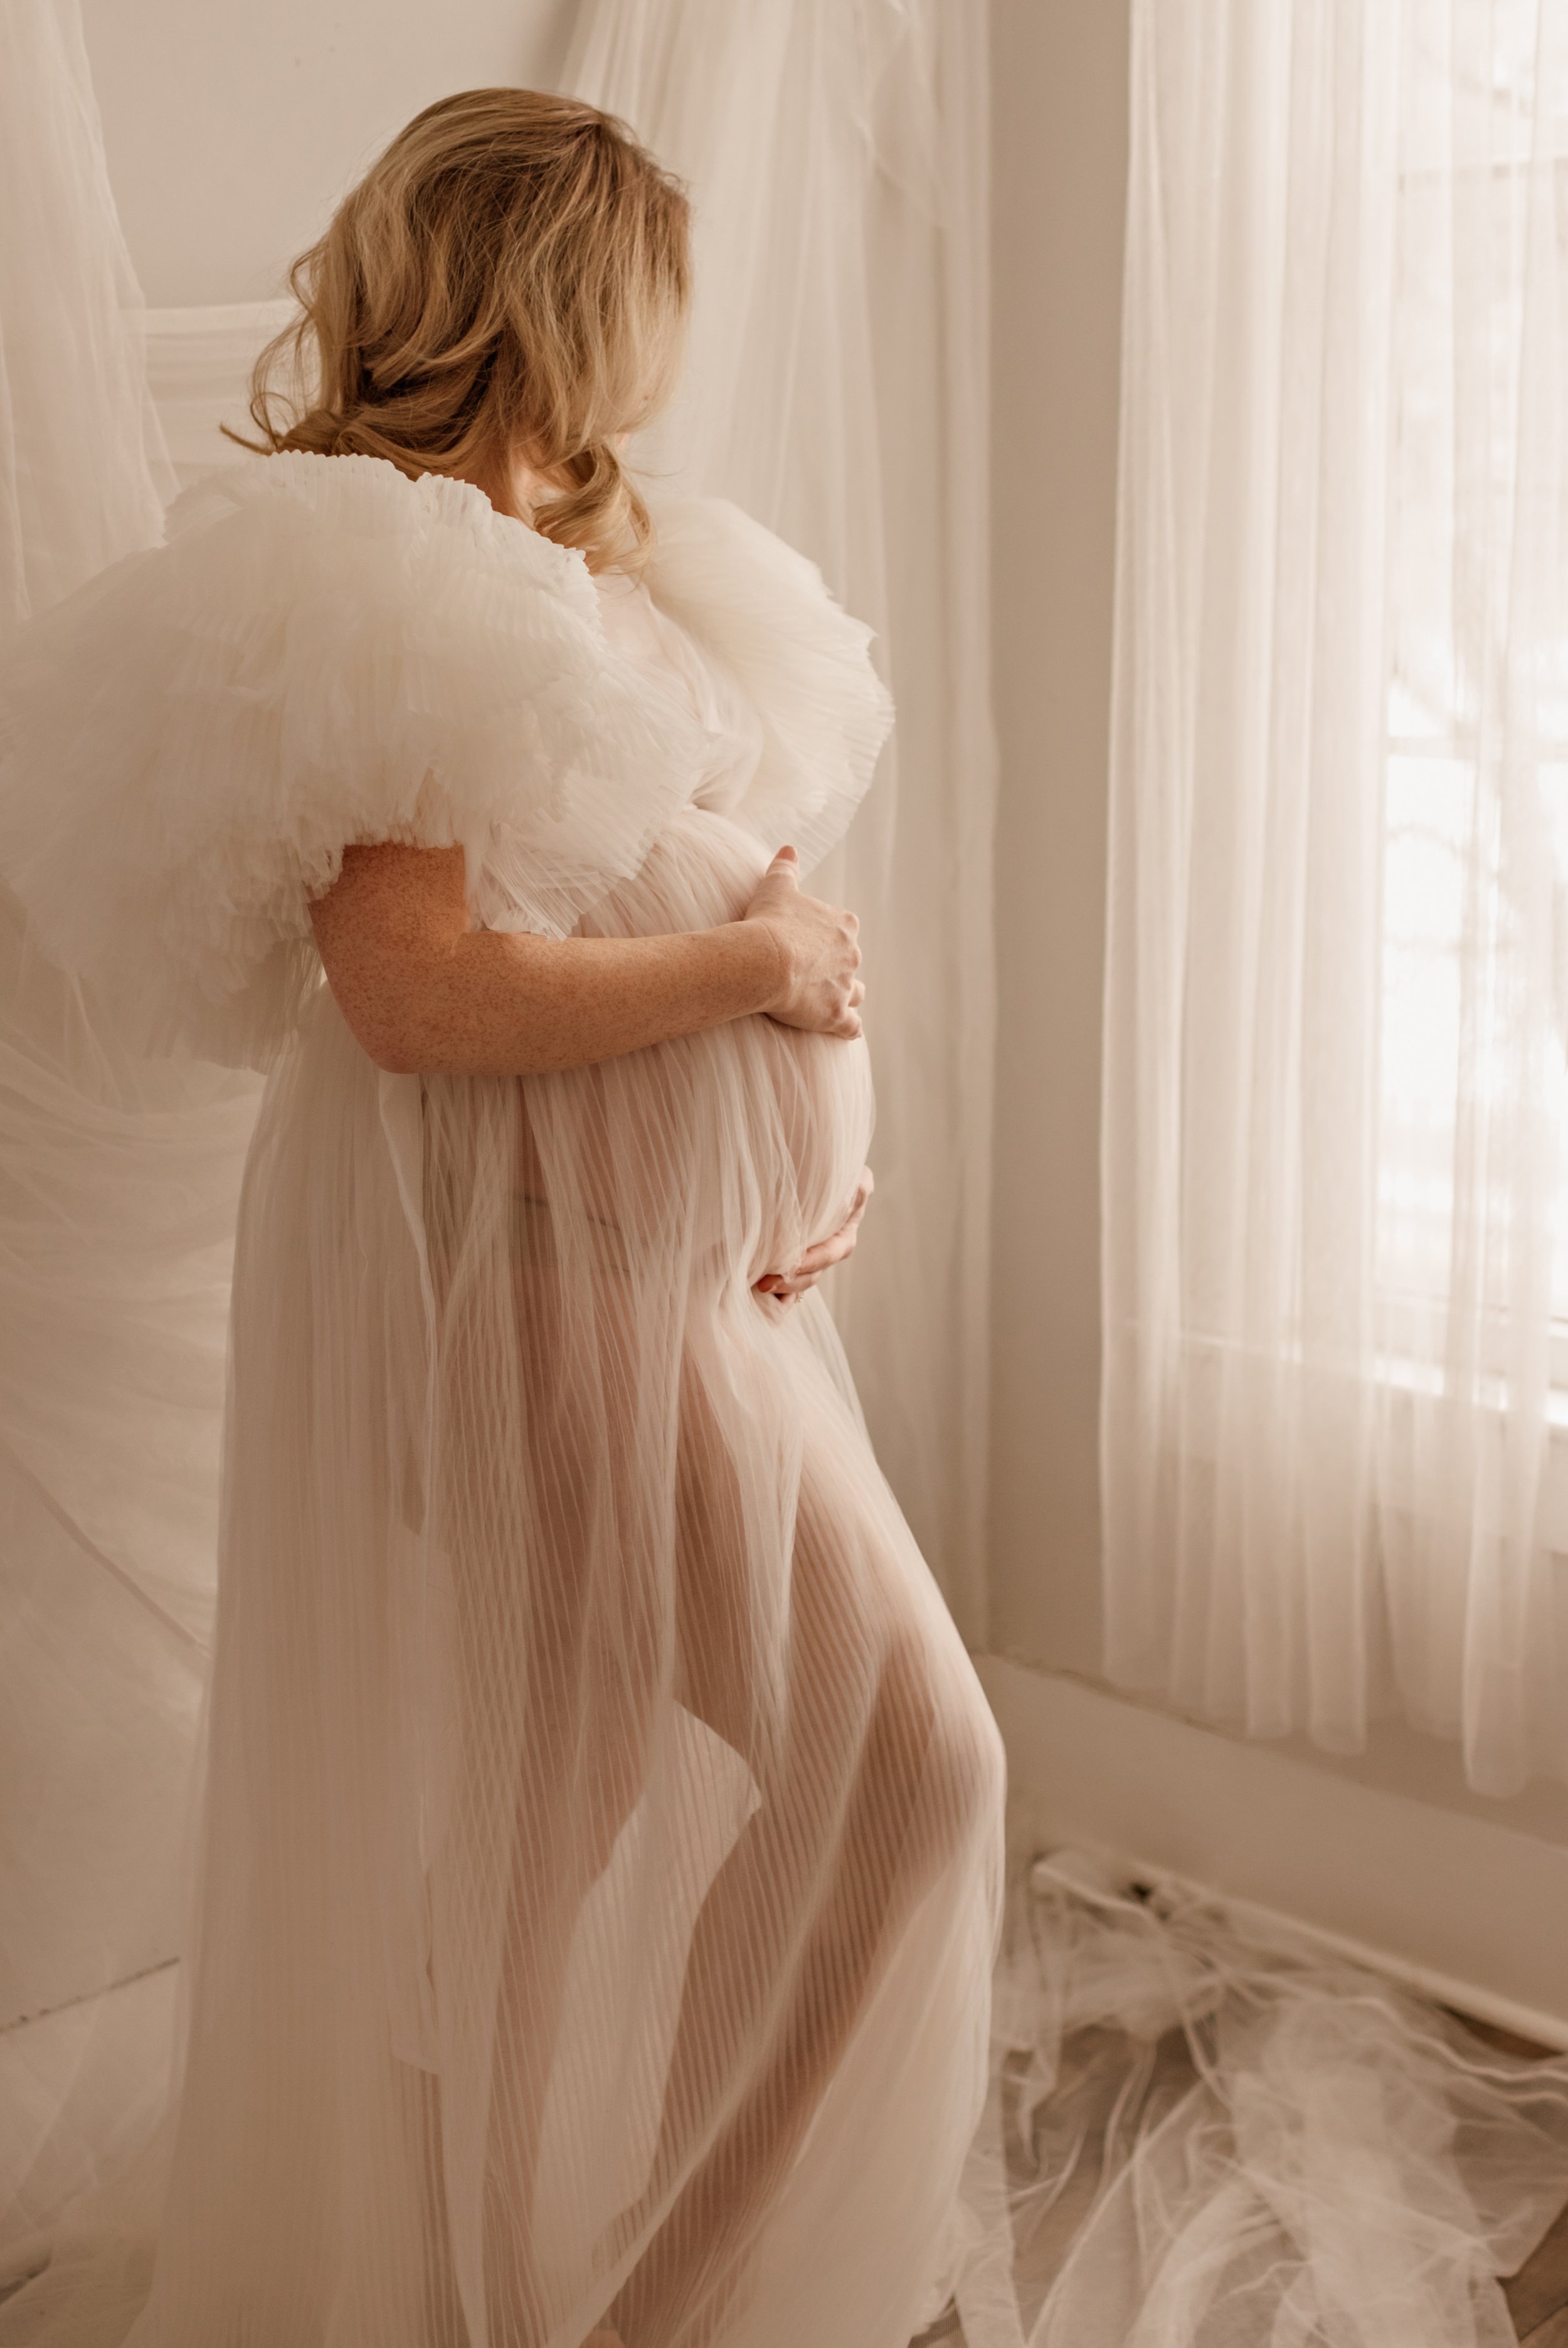 cleveland-ohio-maternity-studio-photographer-lauren-grayson-10.jpg